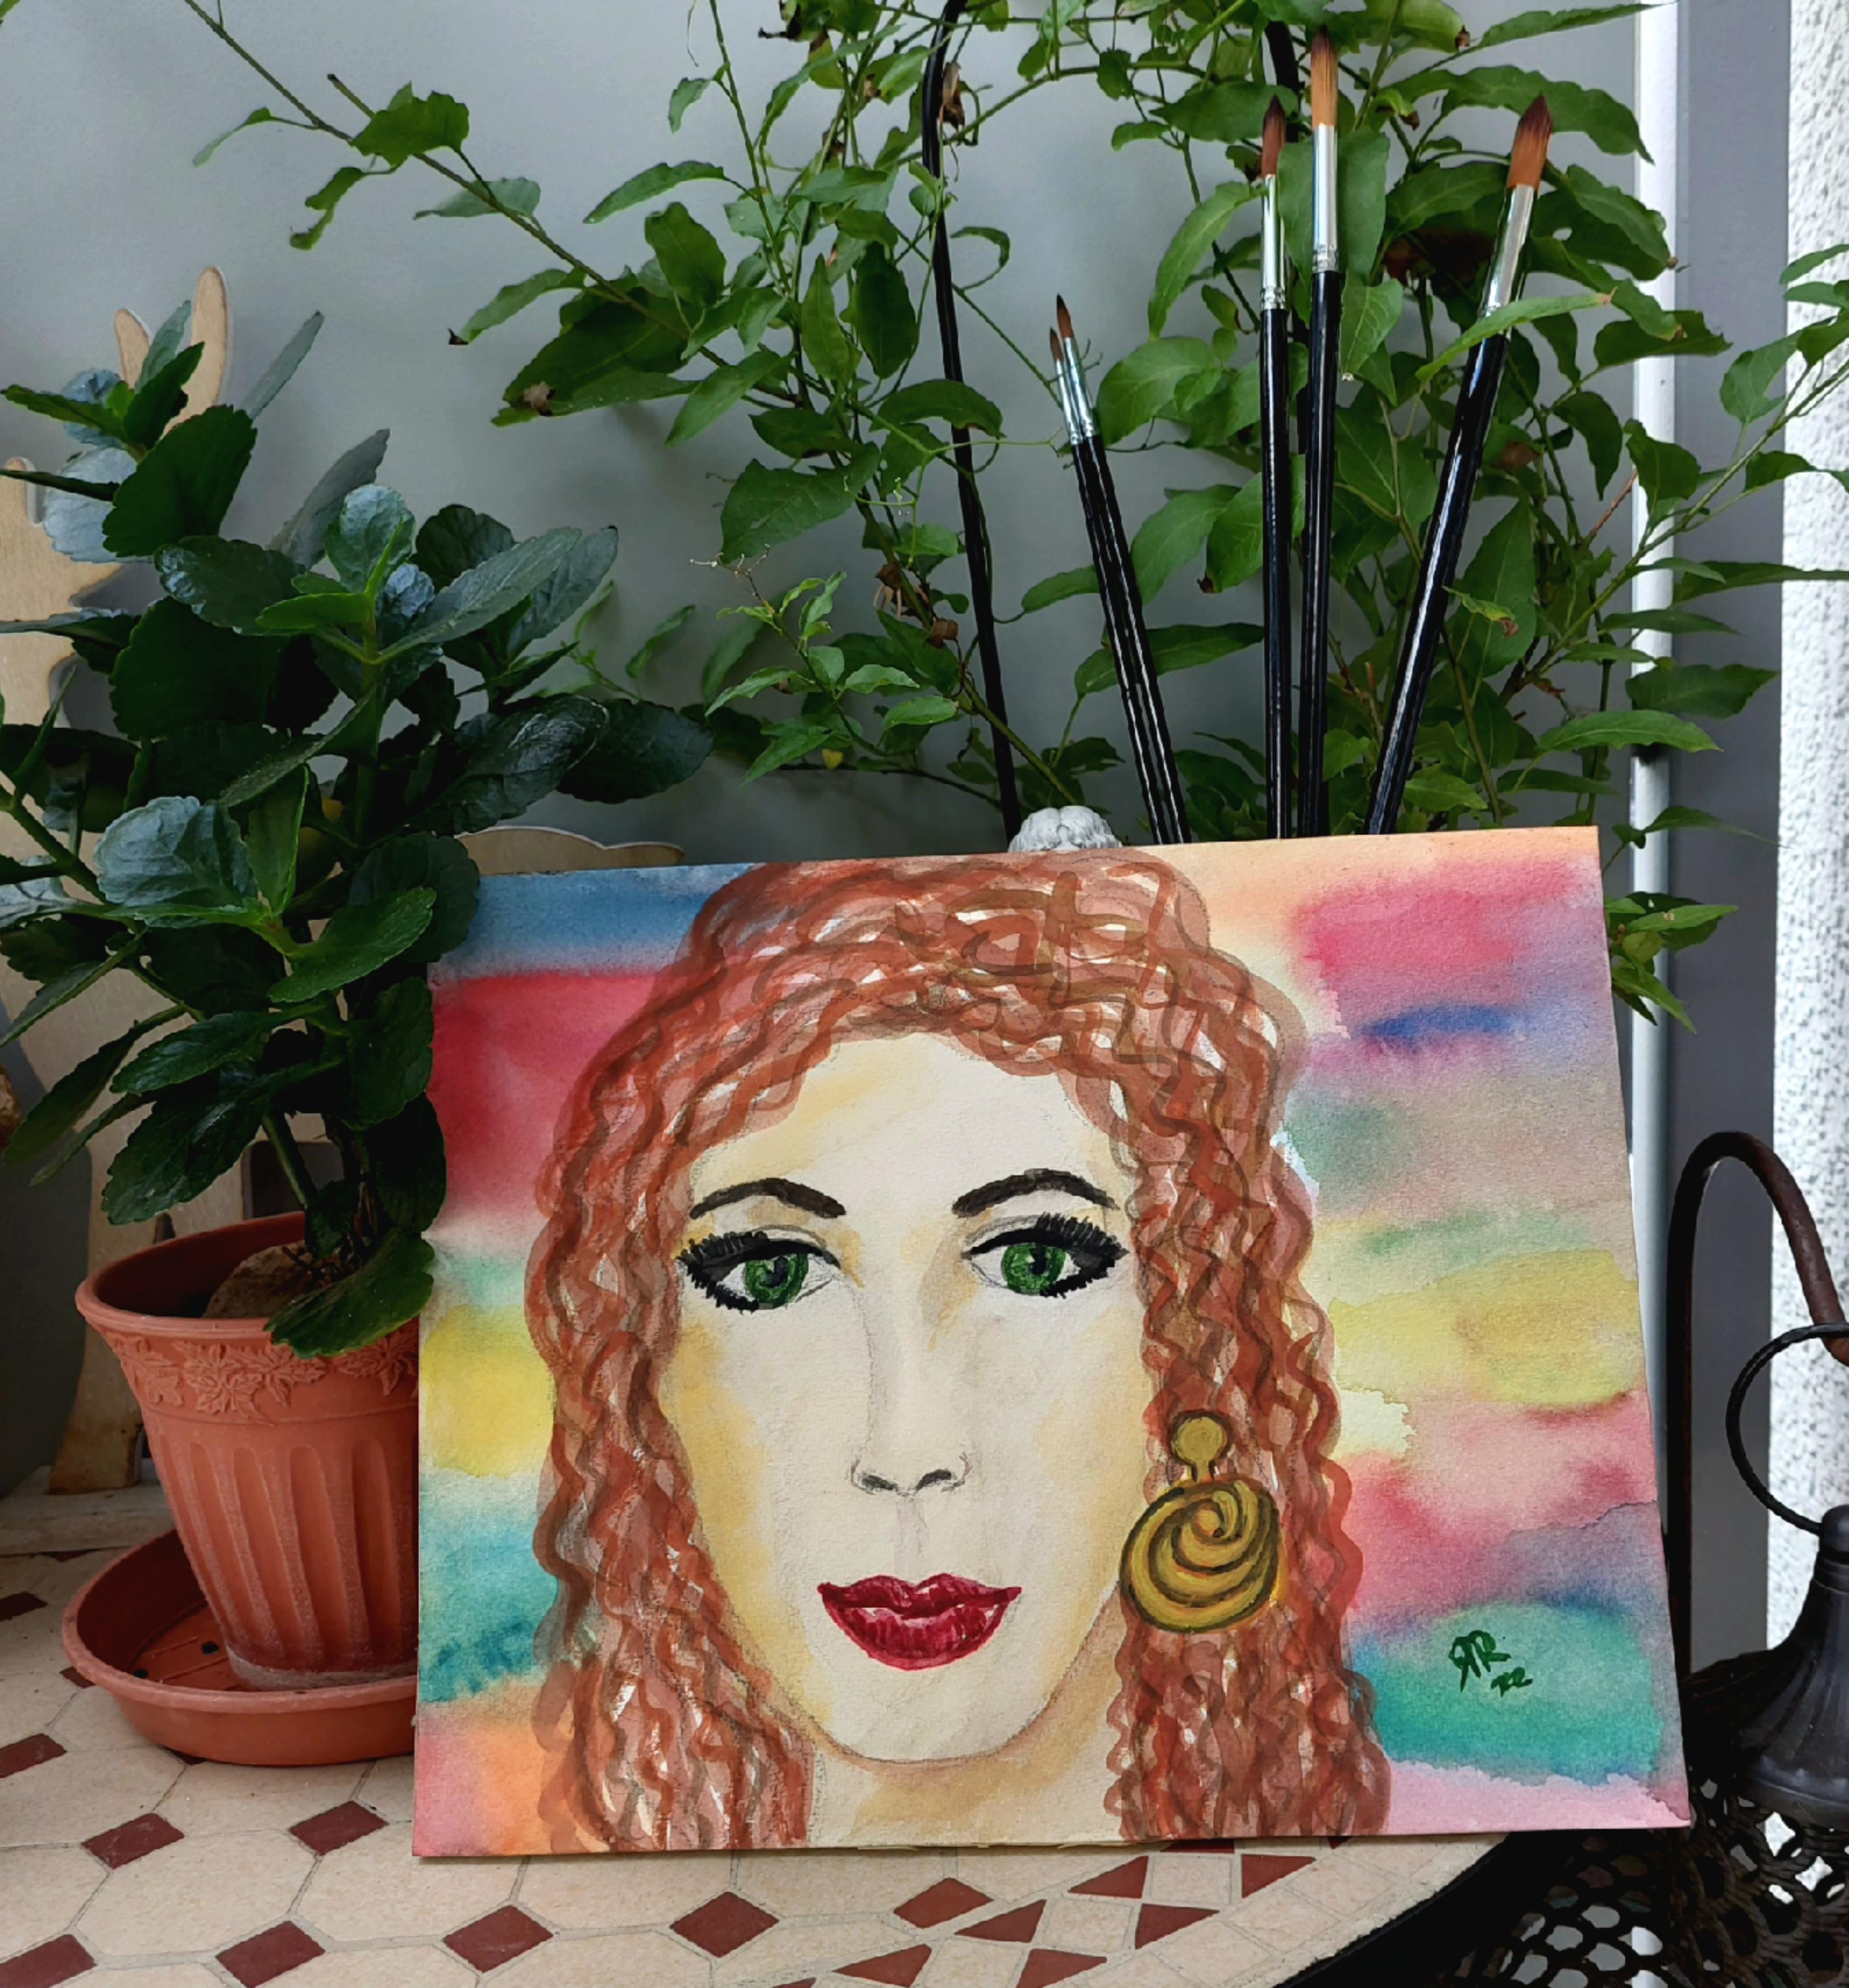 🍁Herbst-Lady #diy
#kunst #aquarell #portrait #herbst #herbstfarbe 
#instagram.com/art_by_rena 